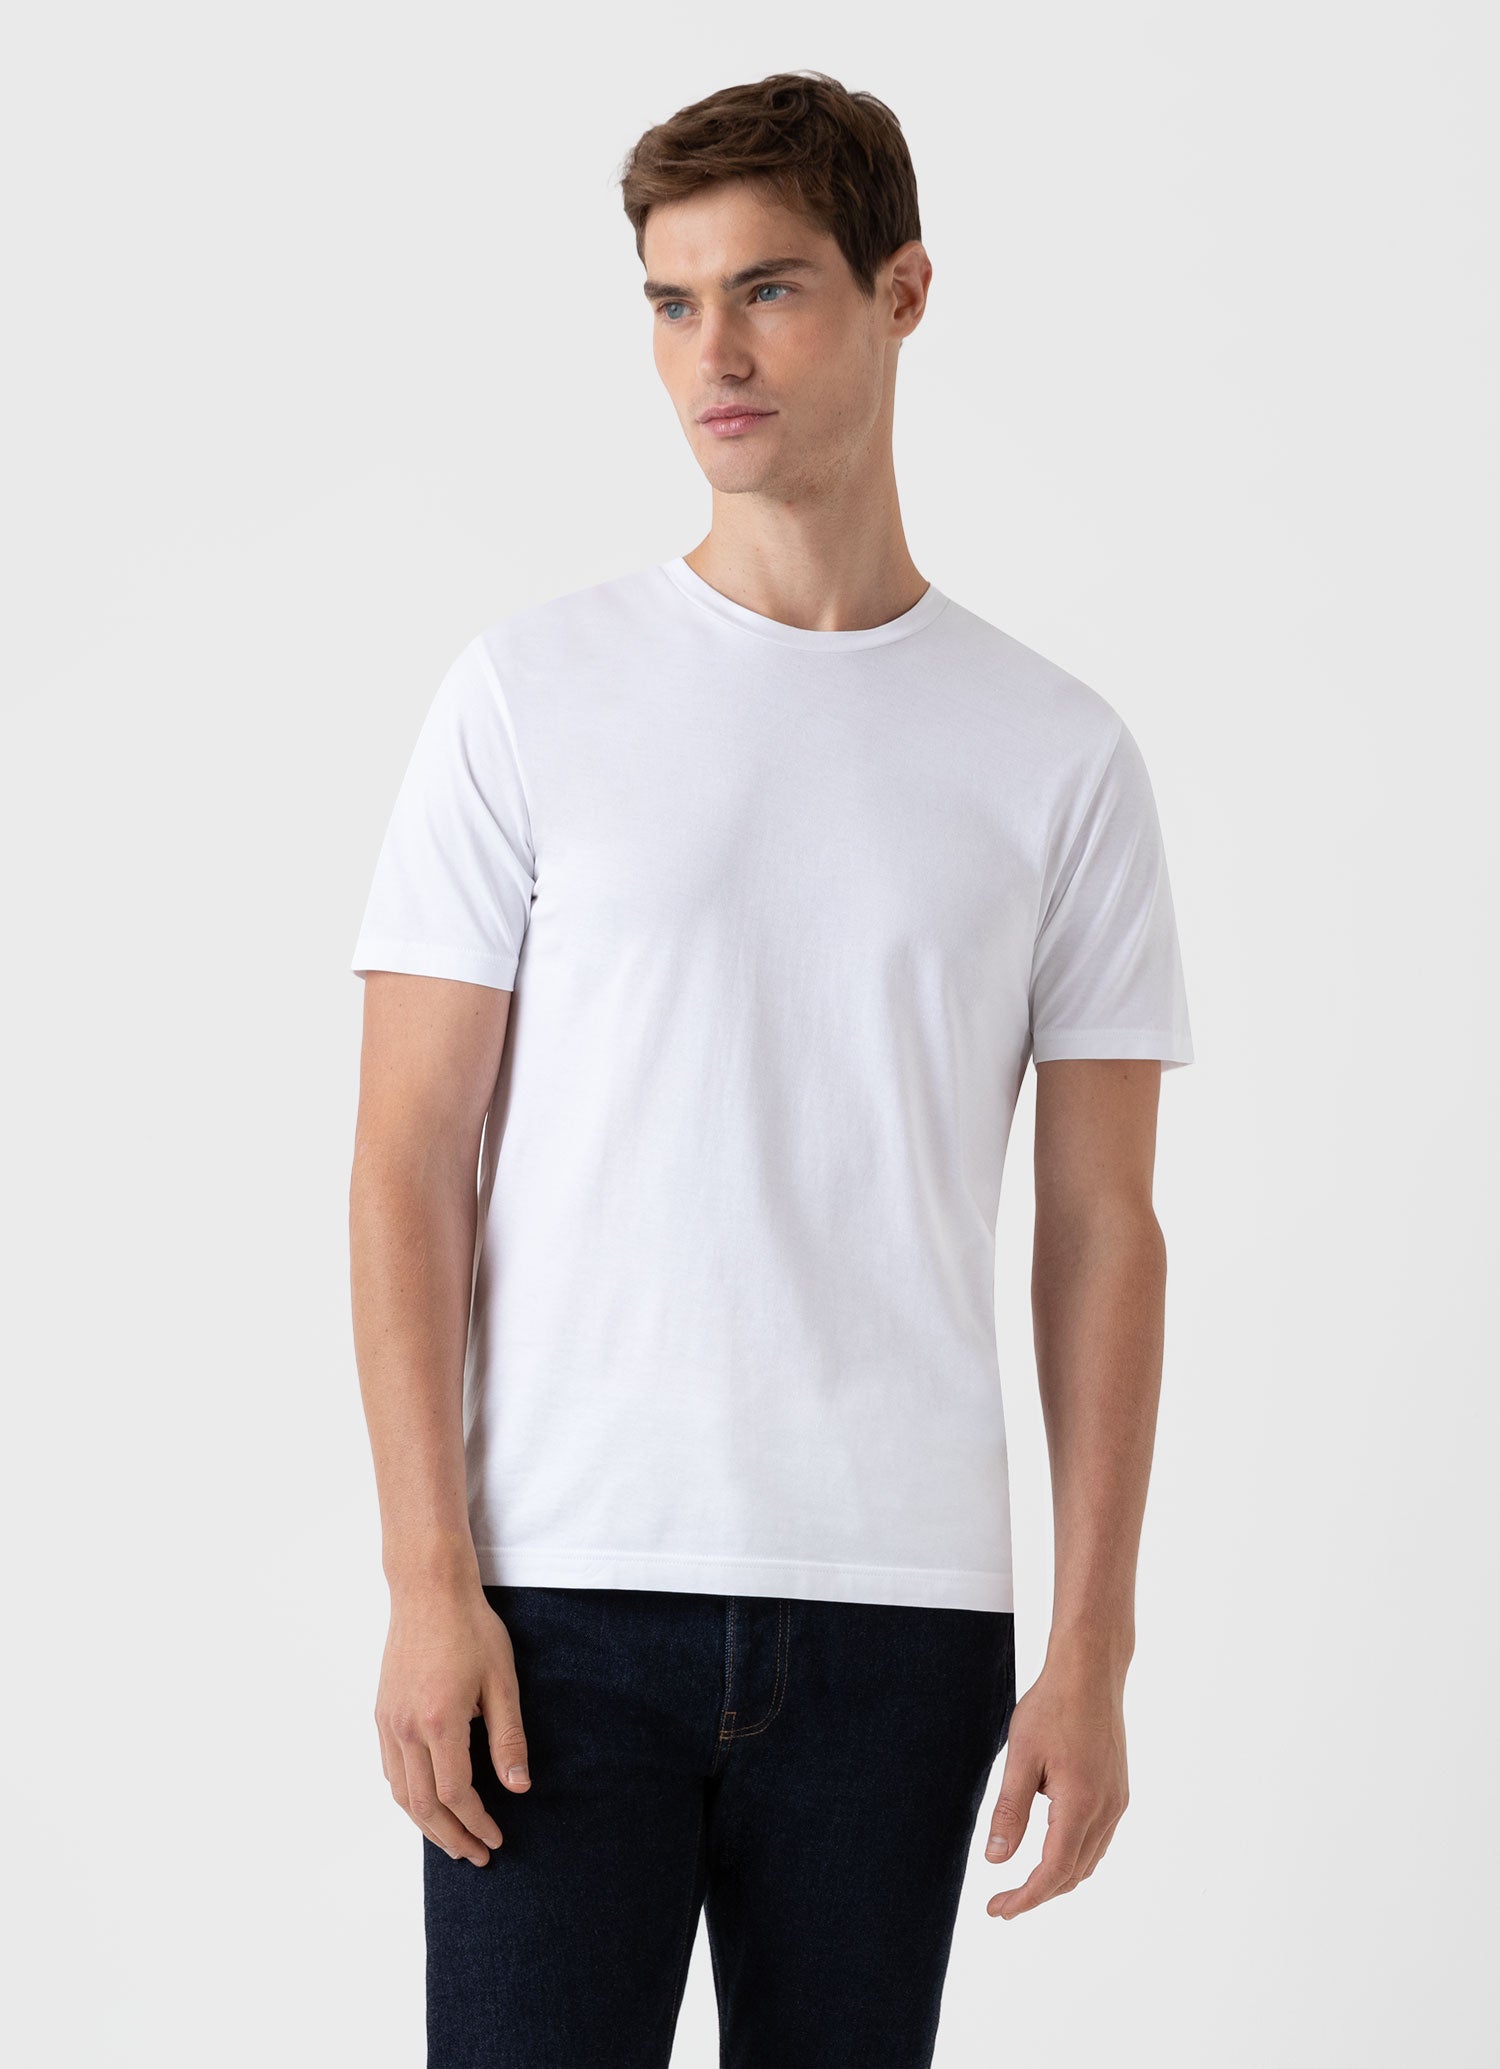 Men's Riviera Midweight T-shirt in White | Sunspel